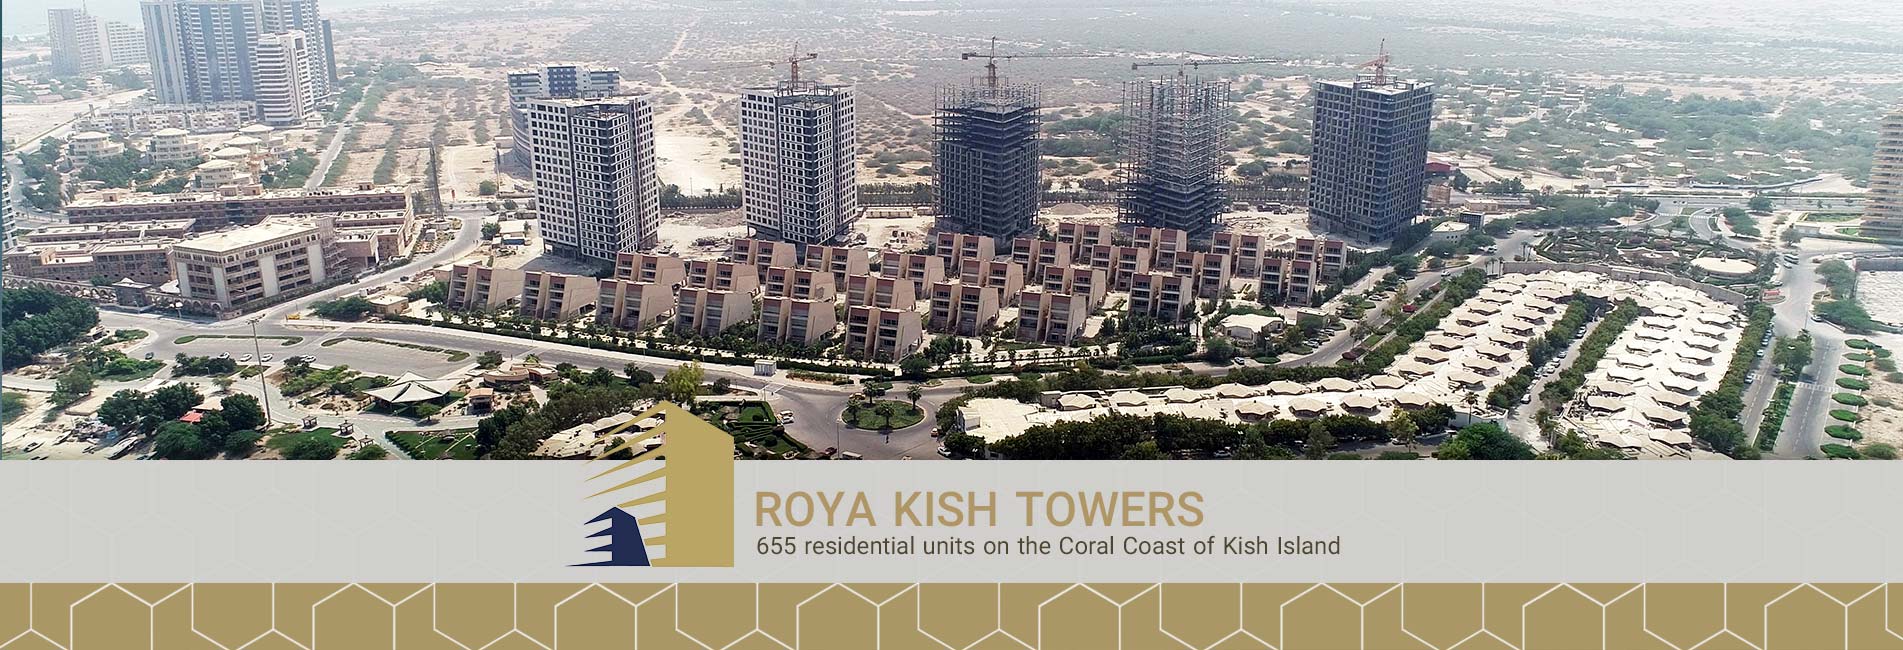 Roya Kish Towers